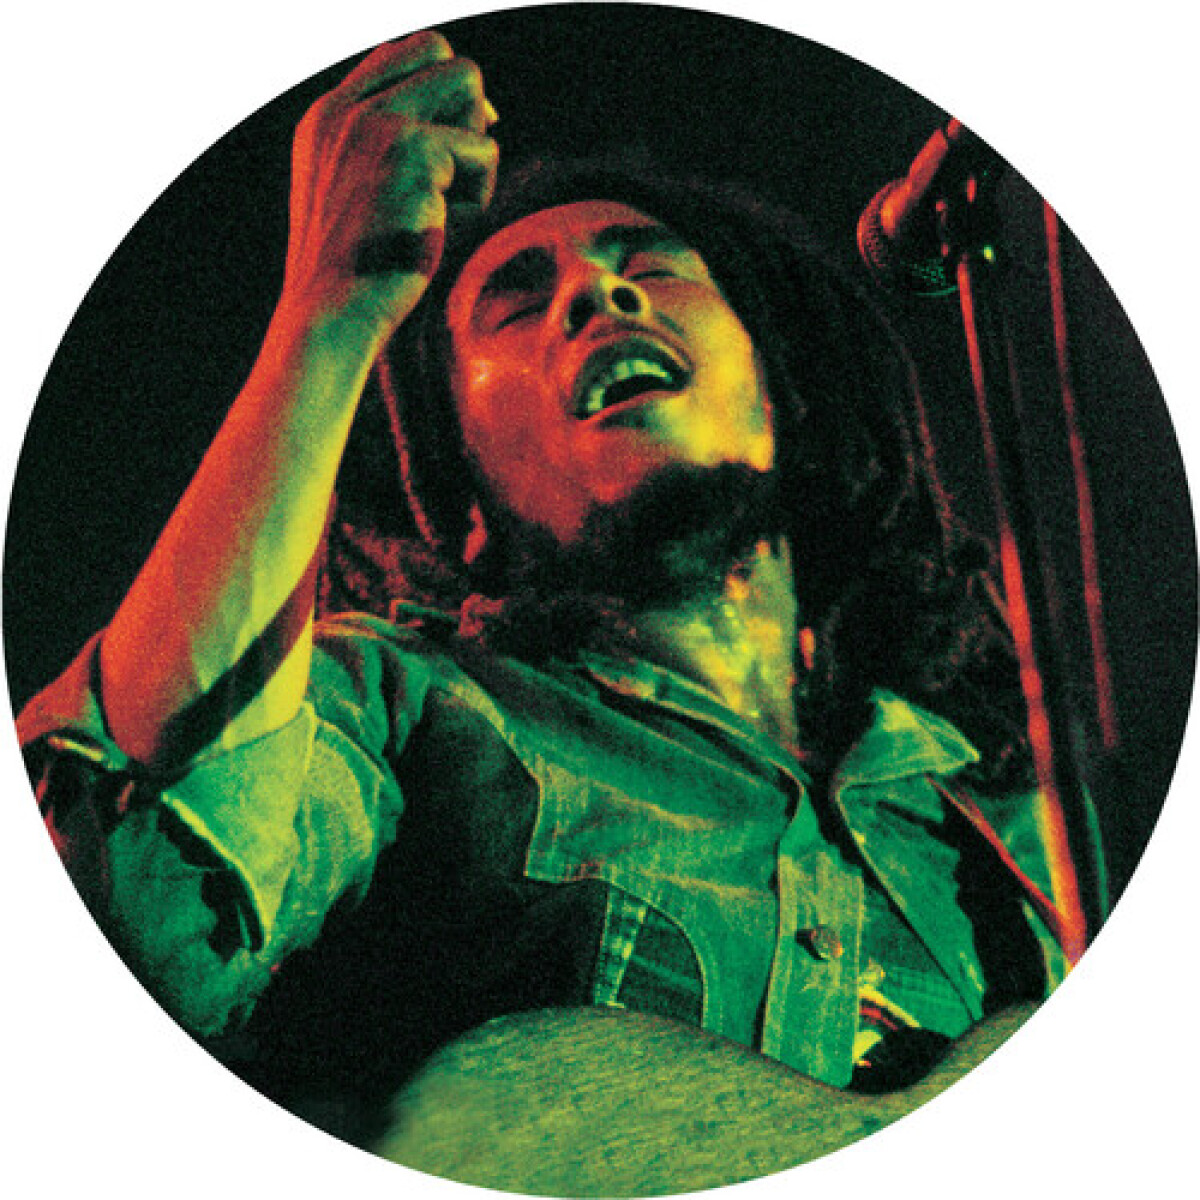 Bob Marley - Soul Of A Rebel (picture) - Vinilo 